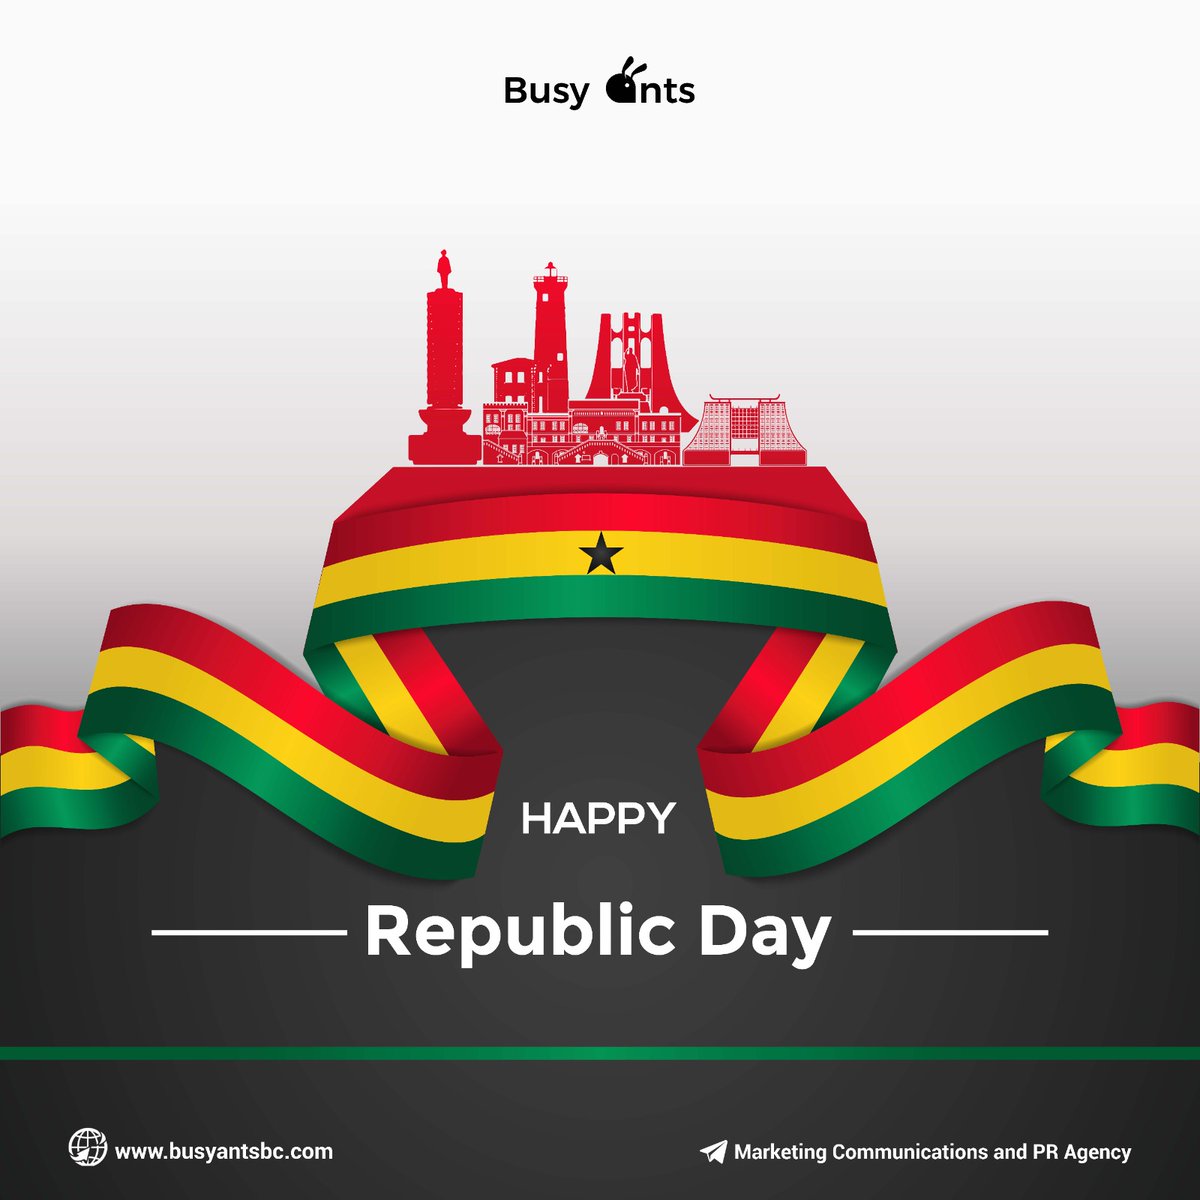 🇬🇭Happy Republic Day😊
#Republic #republicday2023 #RepublicDay #HappyRepublicDay #happyrepublicday2023 #republicdaycelebration #design #DigitalMarketing